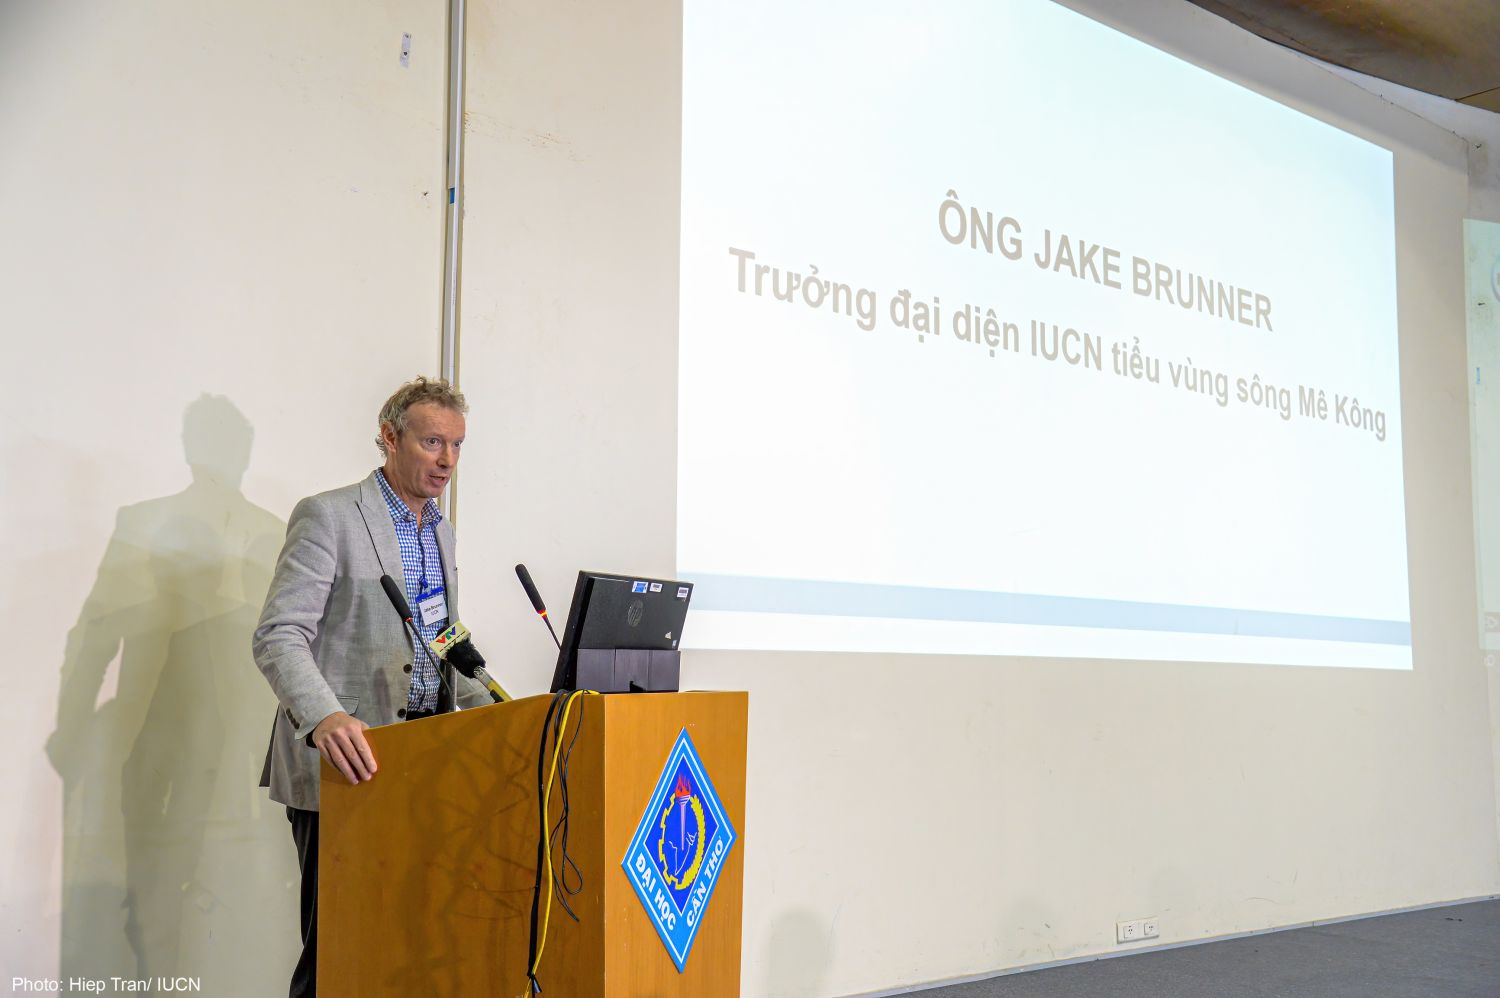 Mr. Jake Brunner - Head, IUCN Lower Mekong Subregion - gave opening remarks at CGD